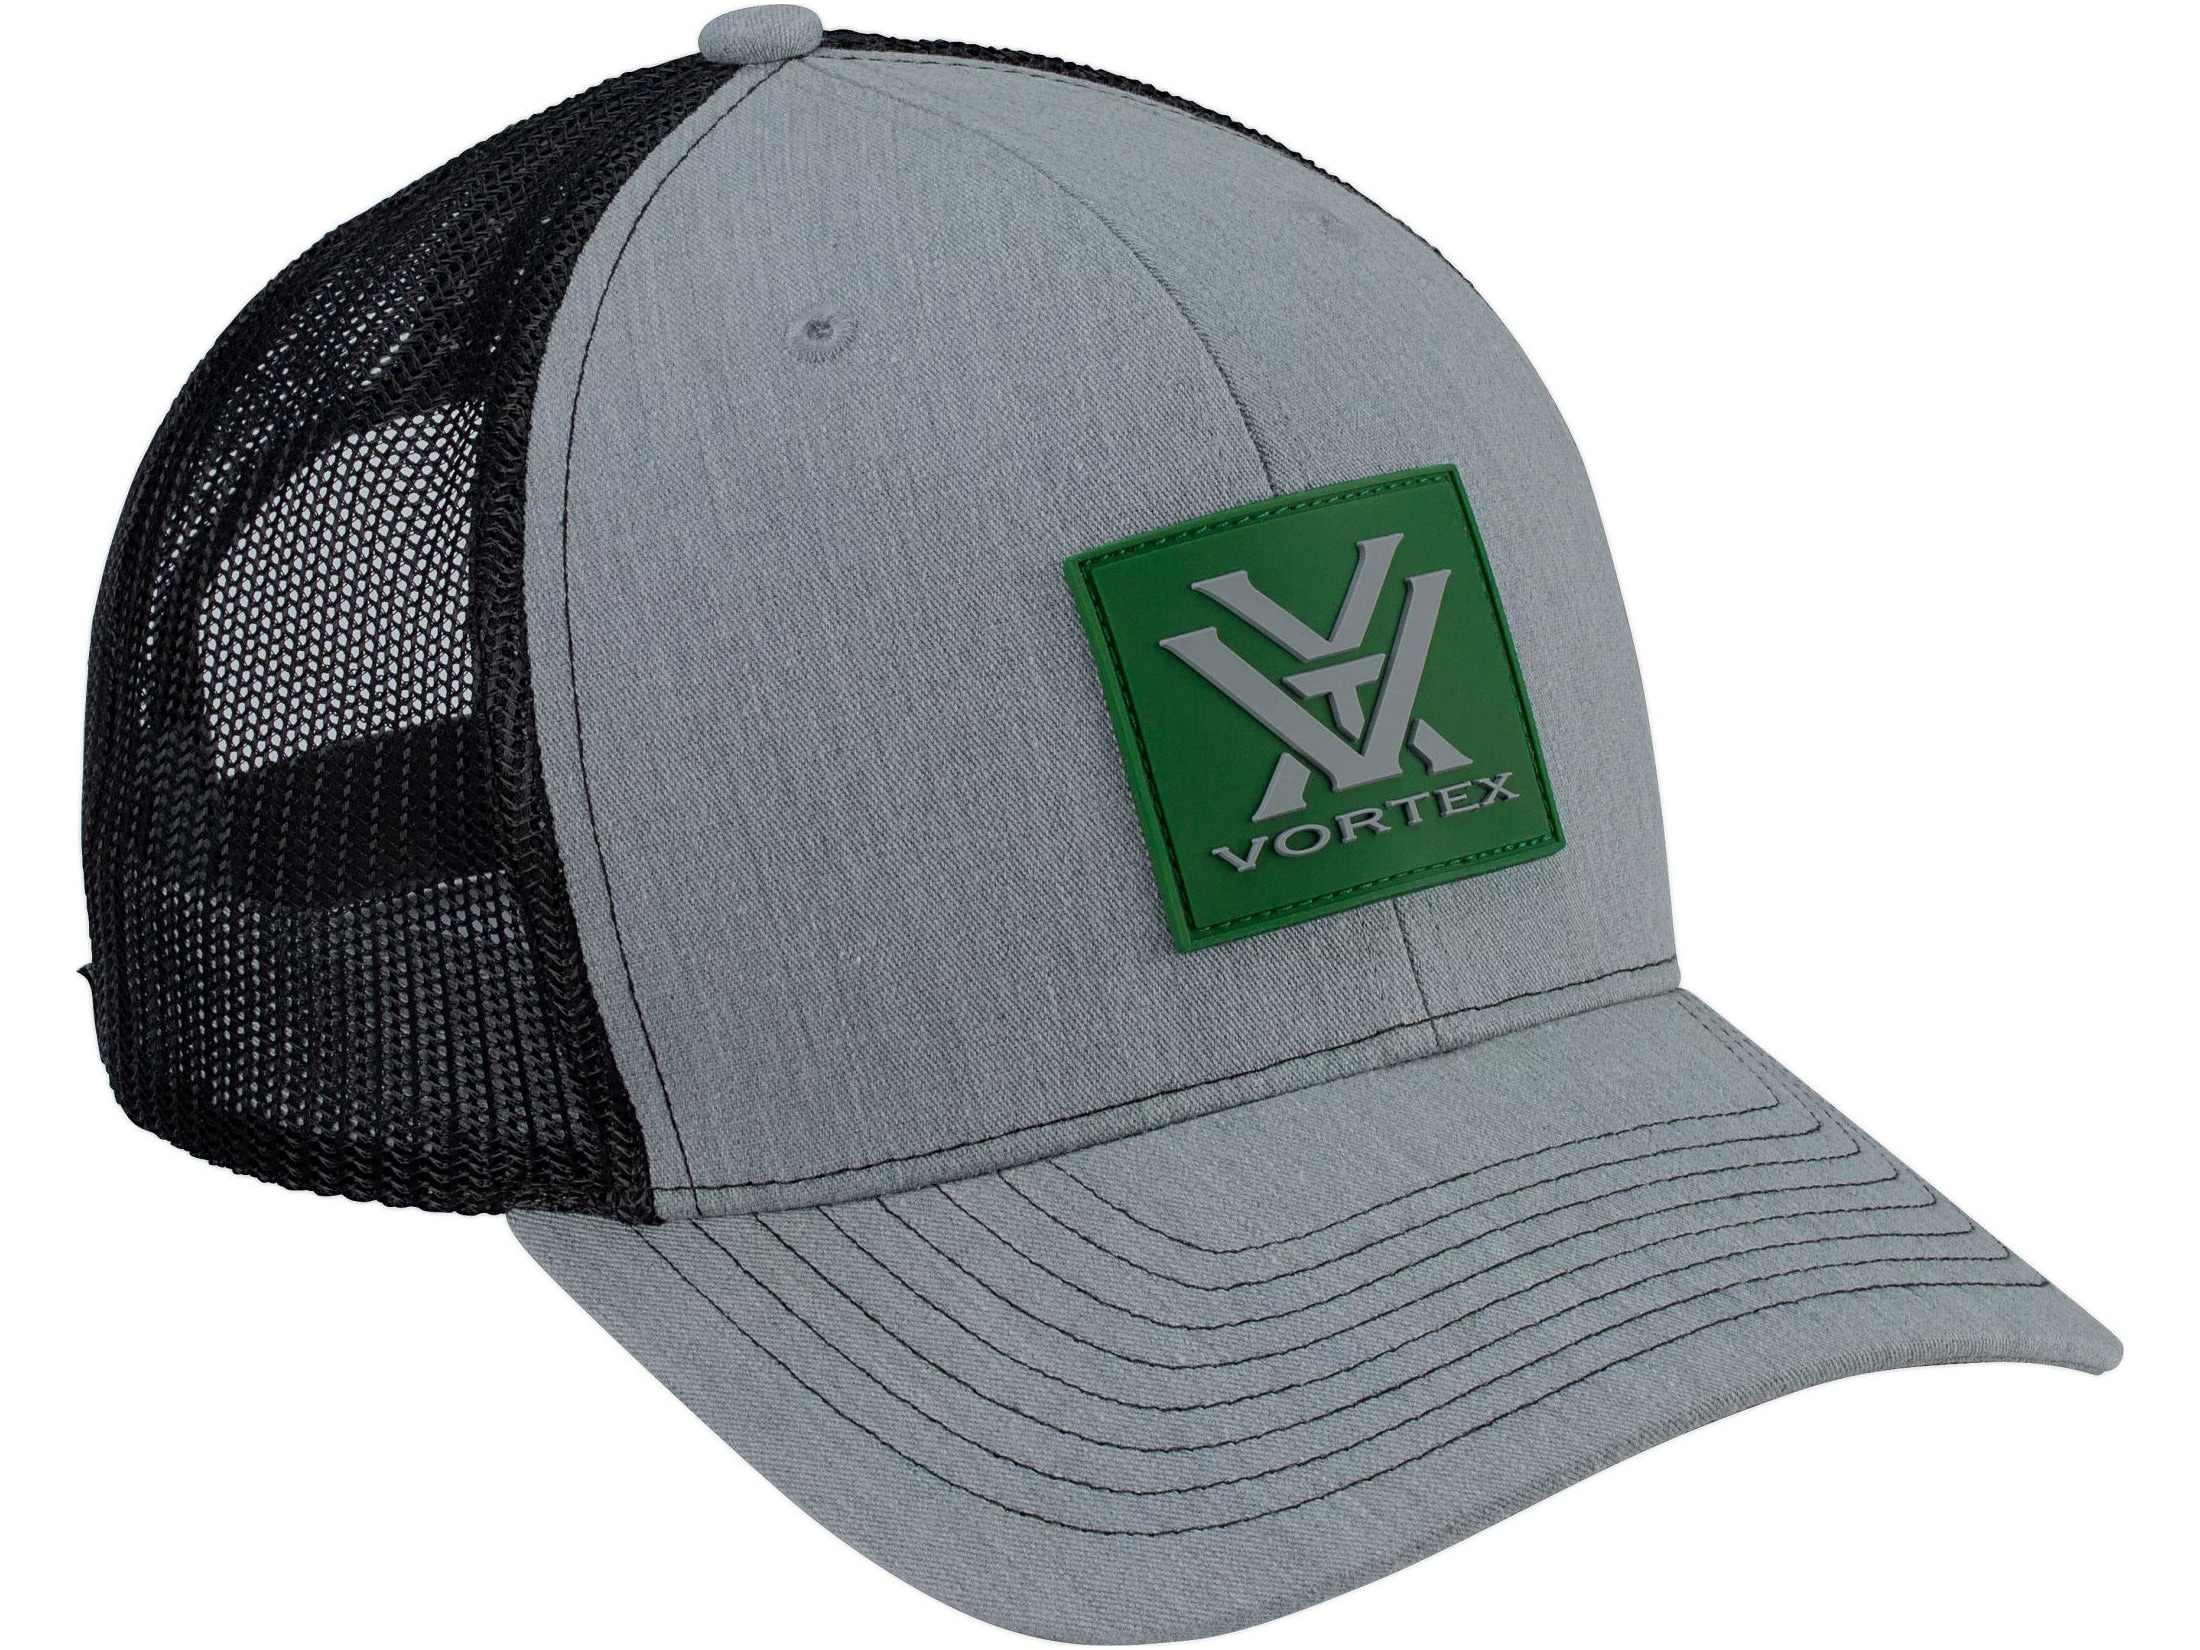 Vortex Optics Men's Persue Protect Hat Gray/Green One Size Fits Most